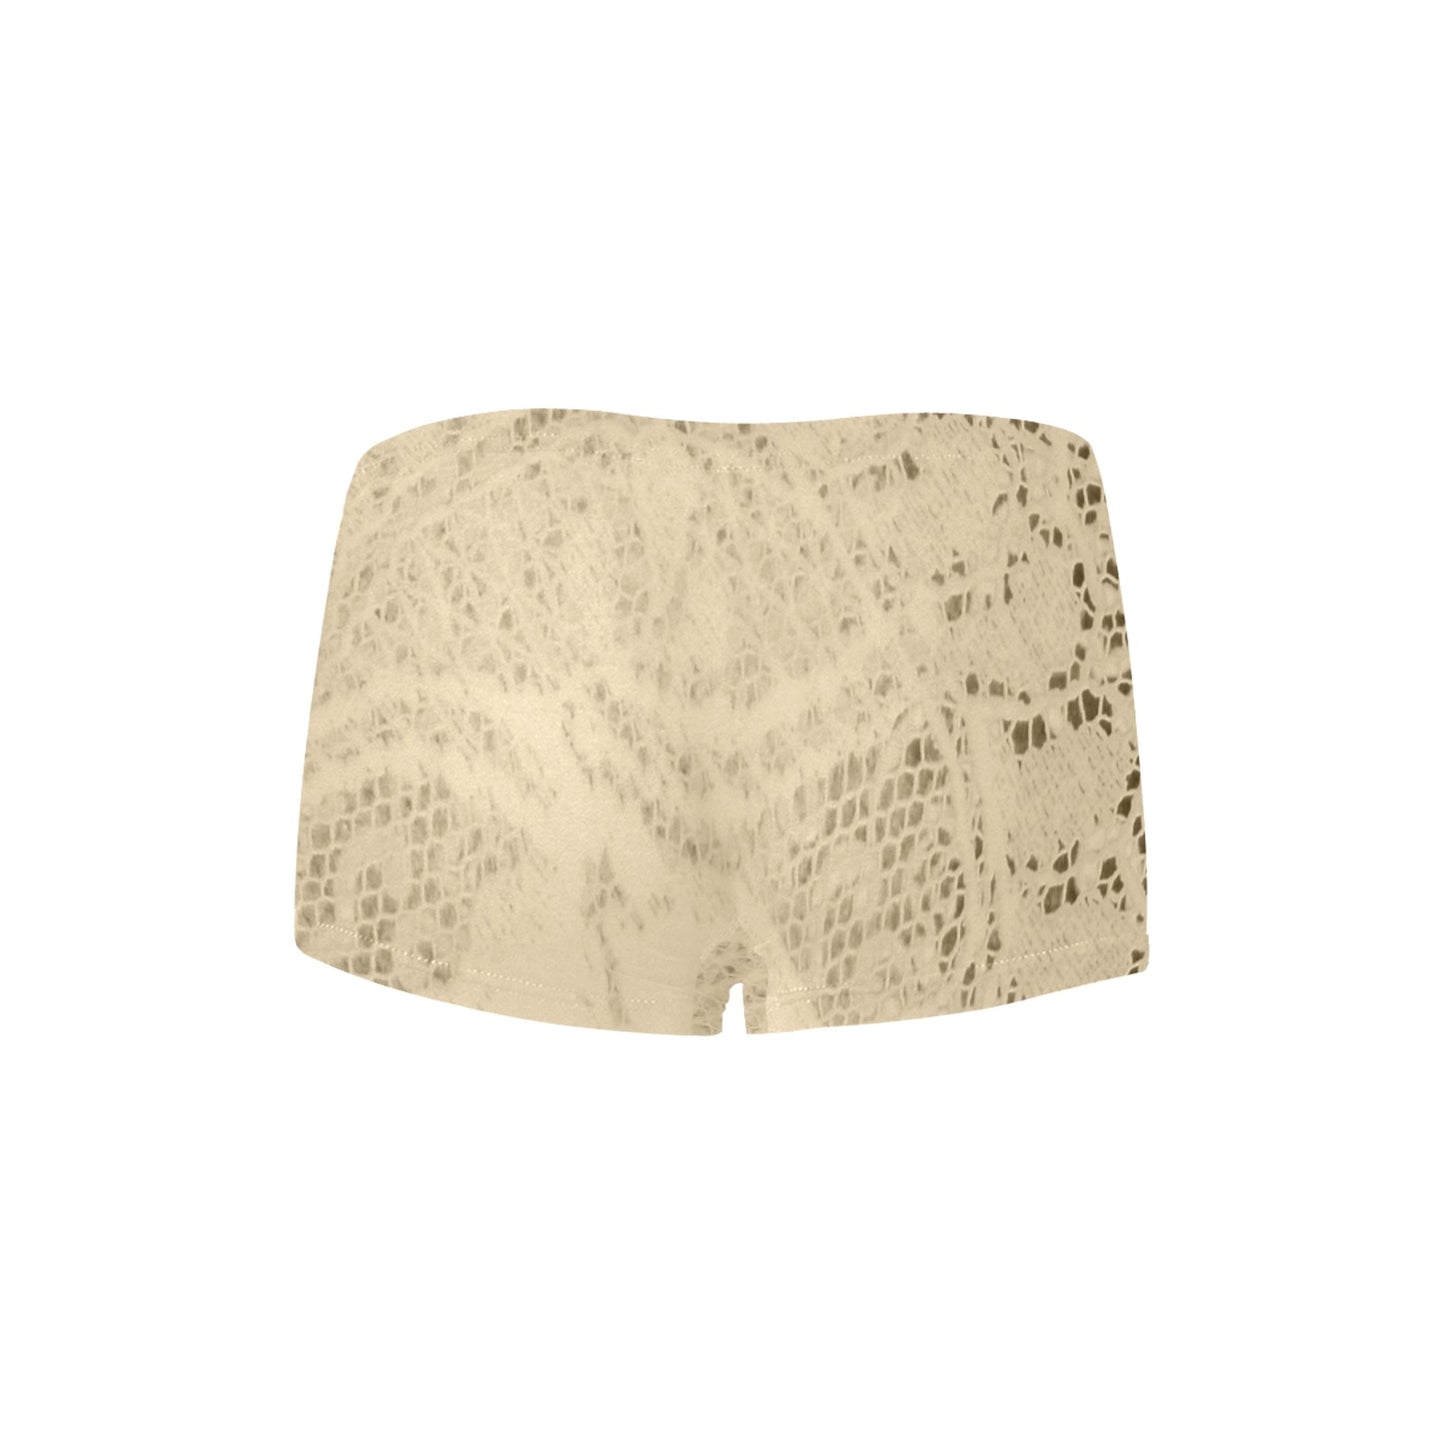 Printed Lace Boyshorts, daisy dukes, pum pum shorts, shortie shorts , design 26